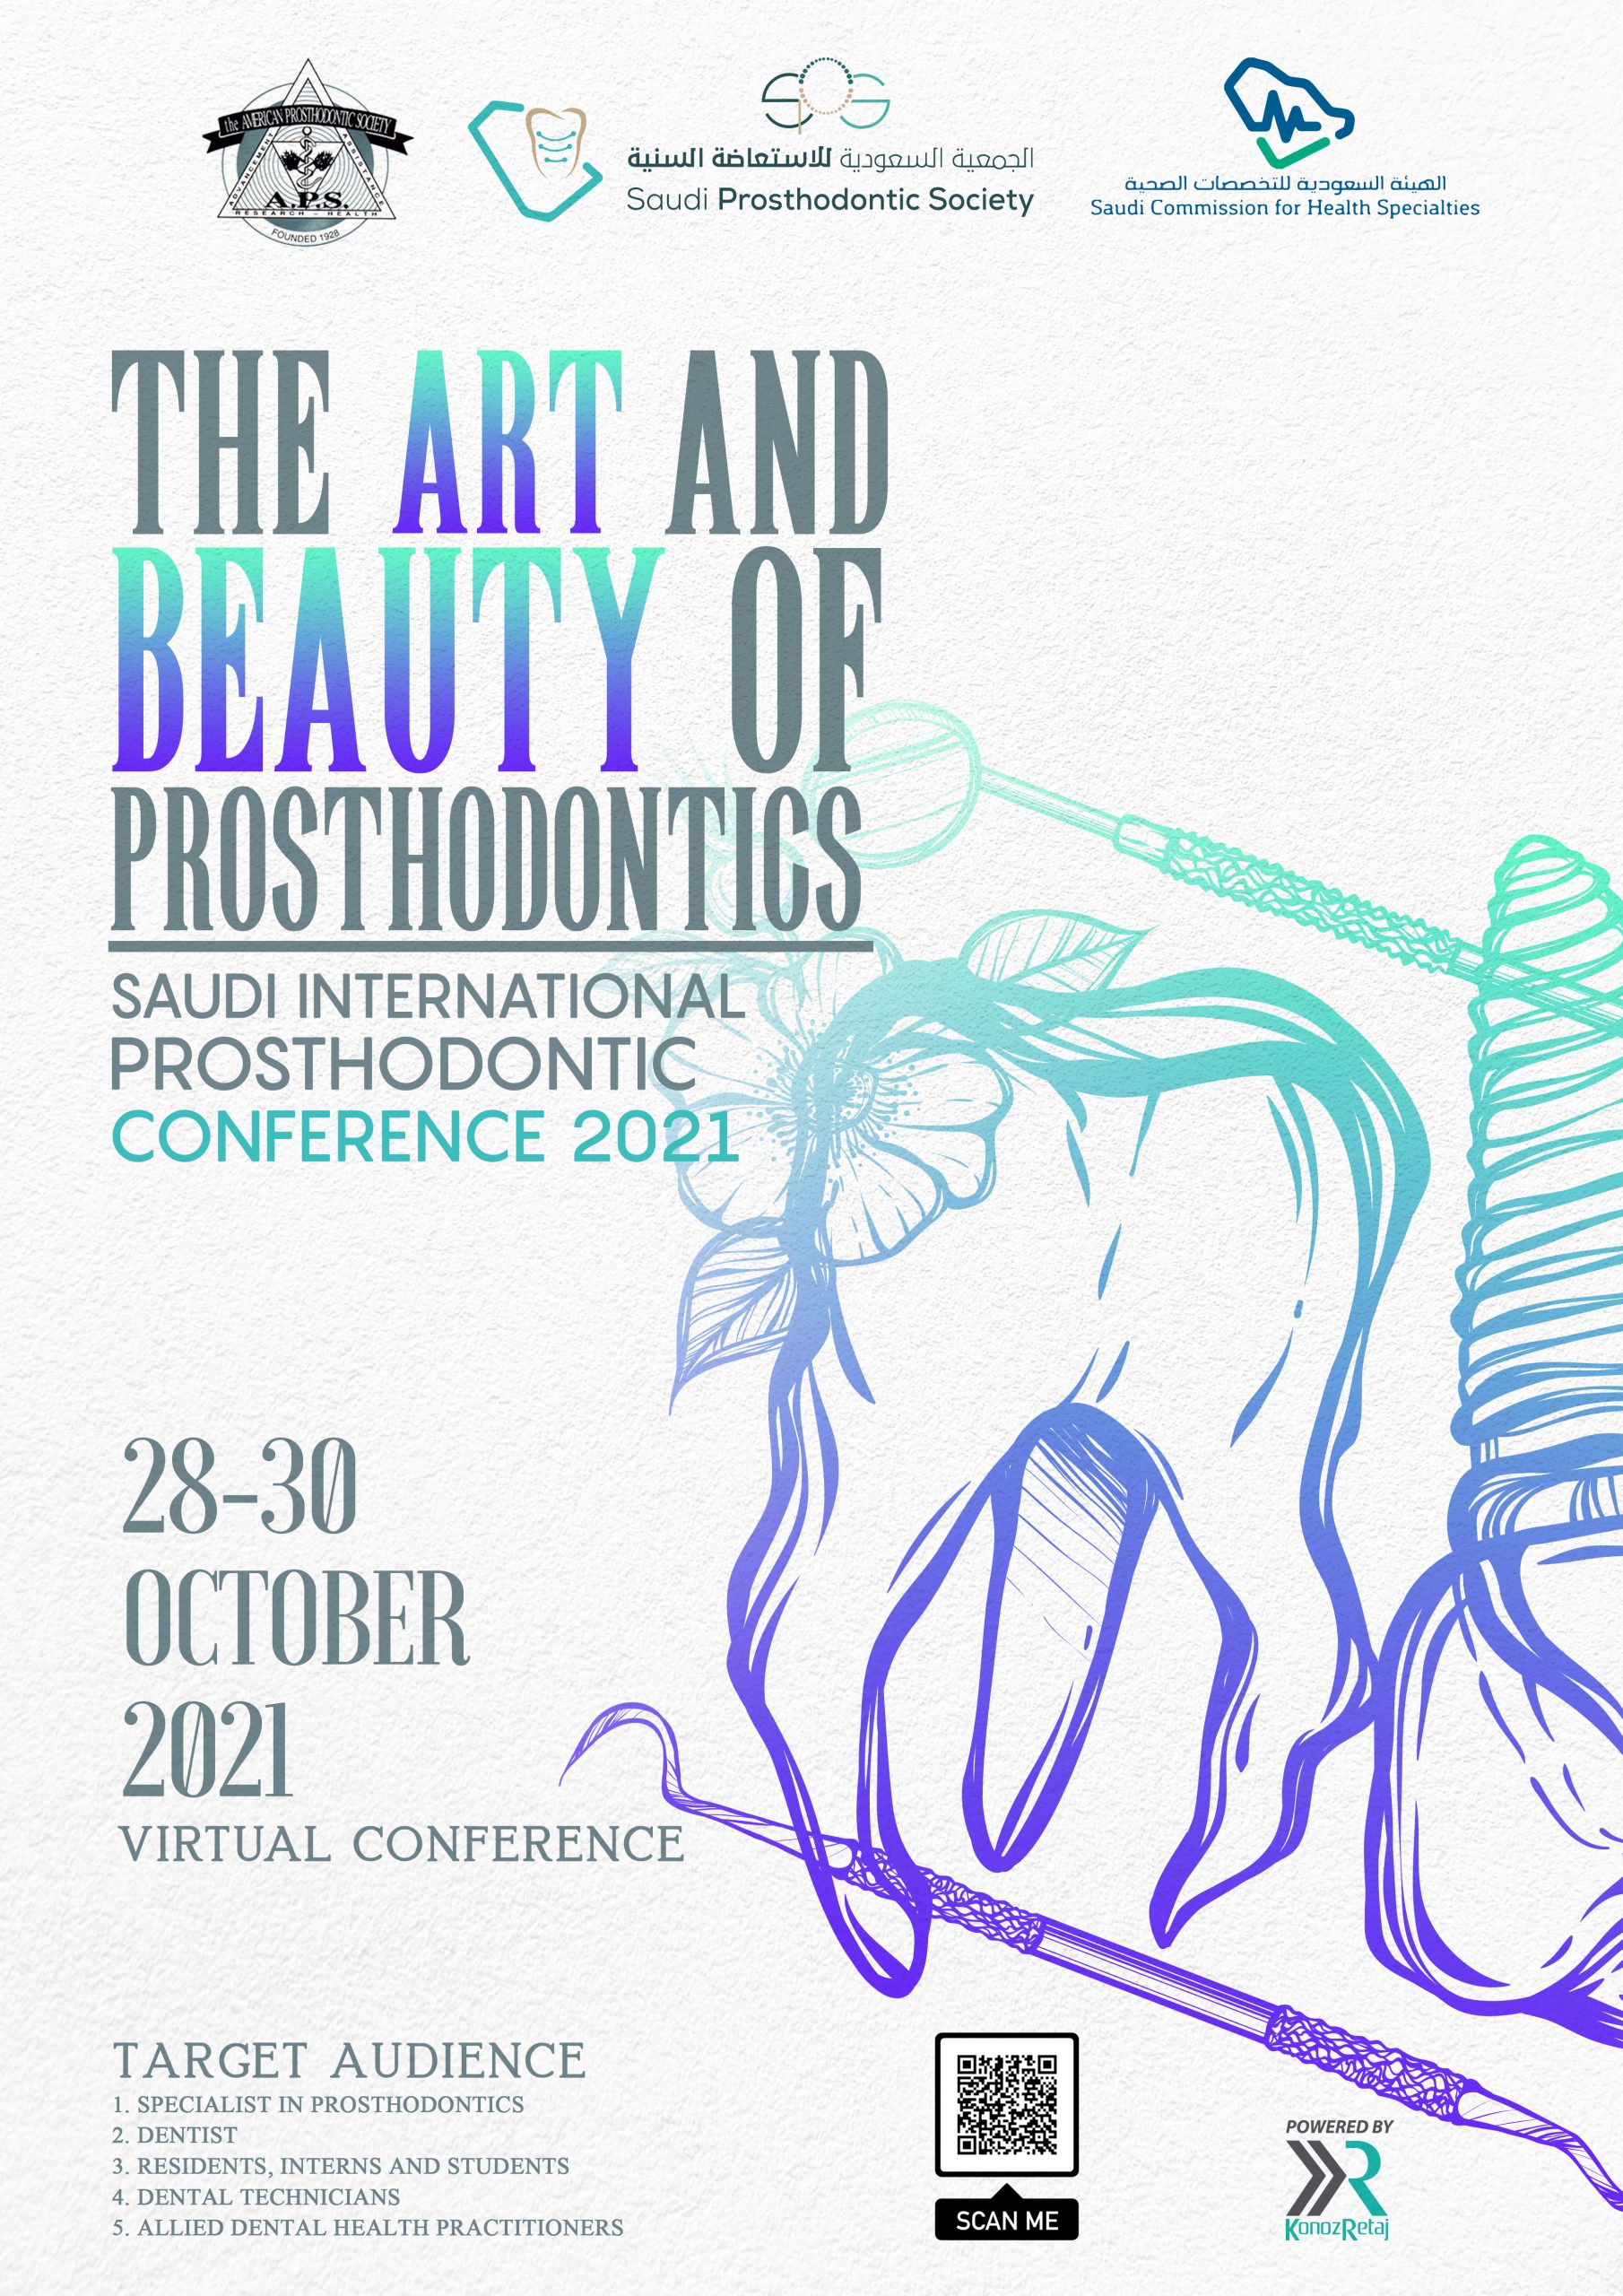 Saudi International Prosthodontics Conference 2021